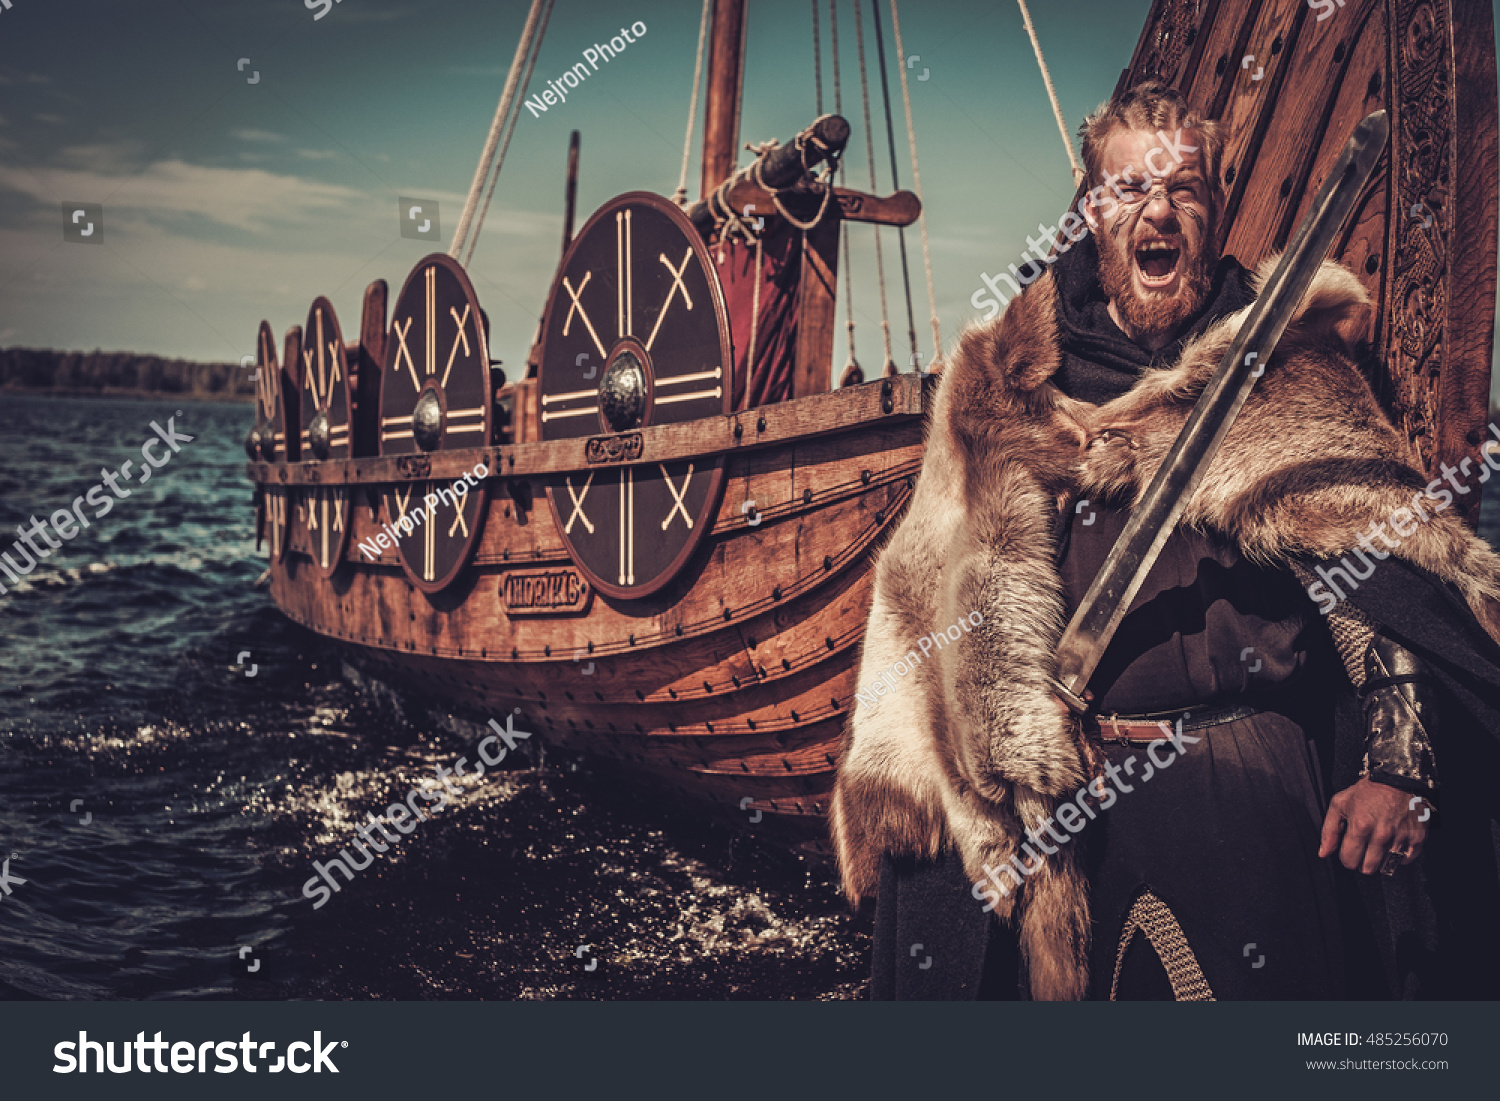 Viking warrior with sword and shield standing near Drakkar on the seashore. #485256070